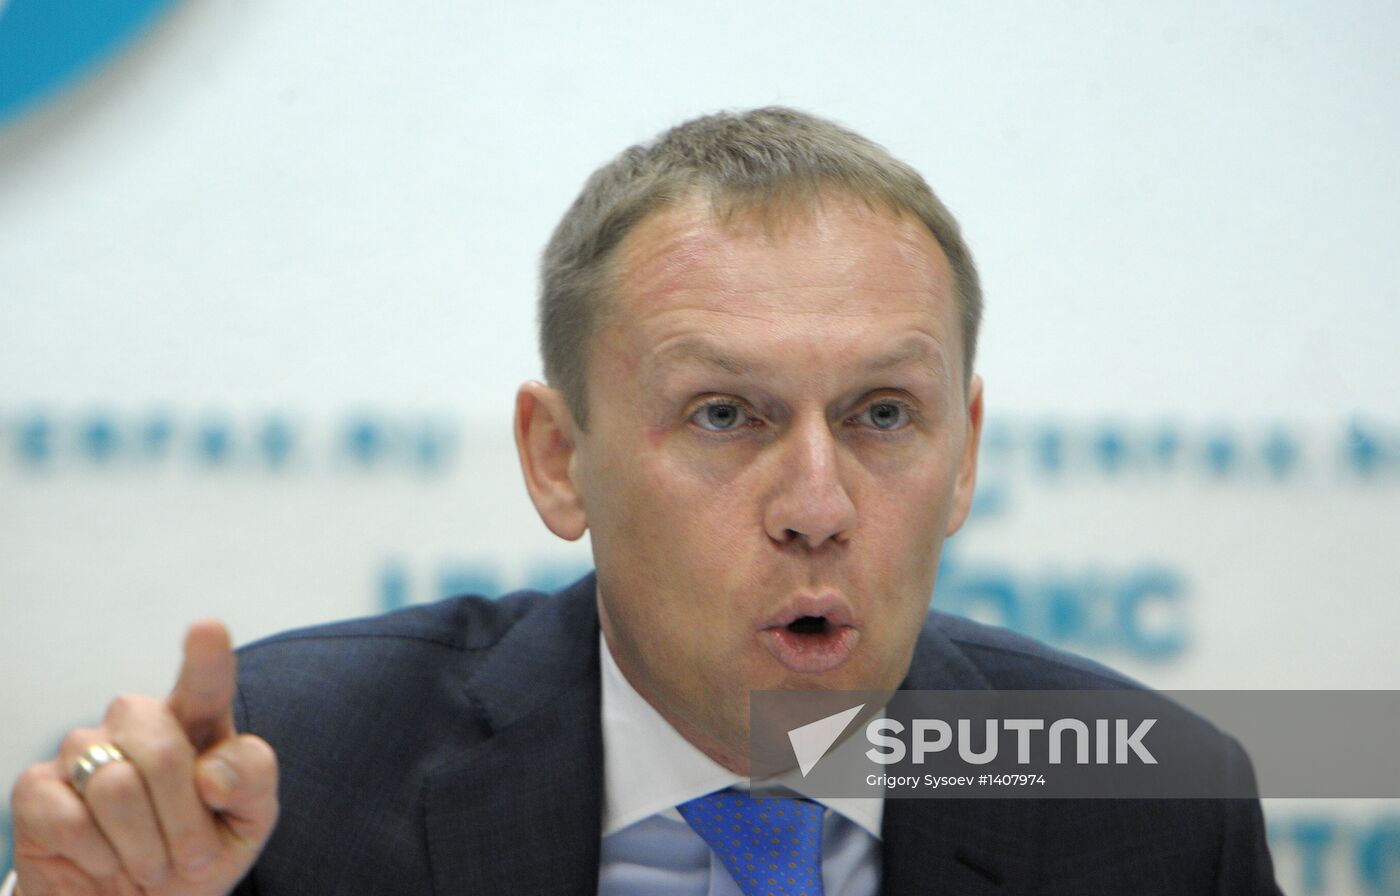 Duma deputy Lugovoy gives news conference on Litvinenko's case